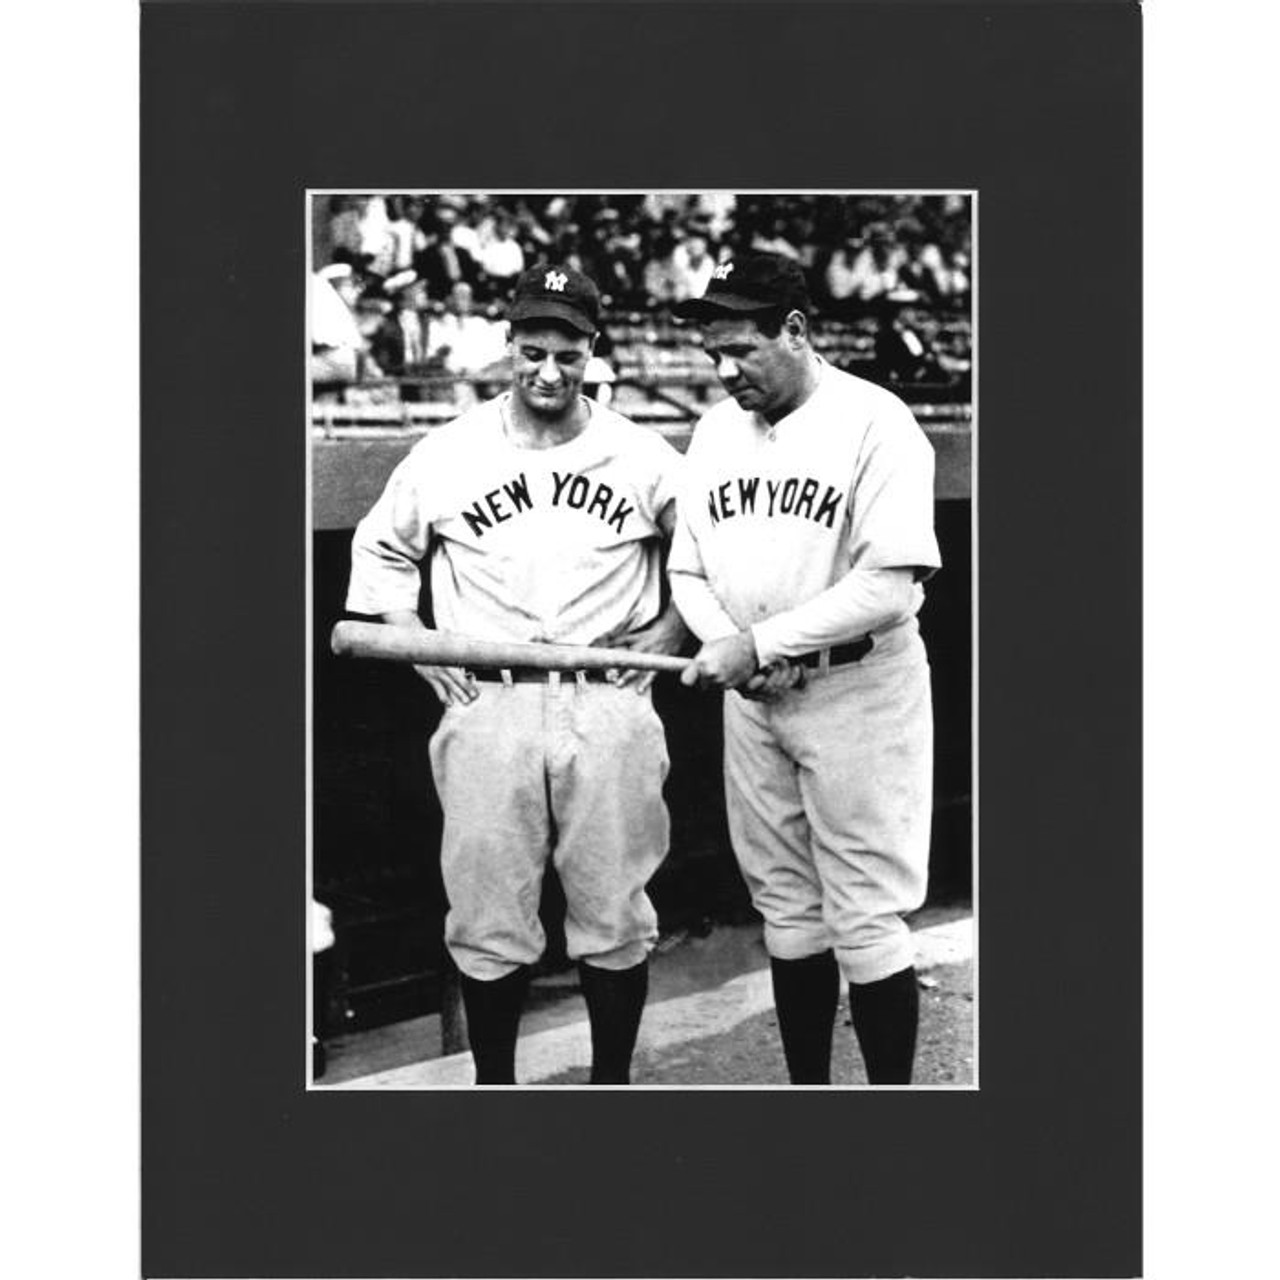 Huge 24 in 1927 Babe Ruth Yankees Signed Baseball Wood Wall Art